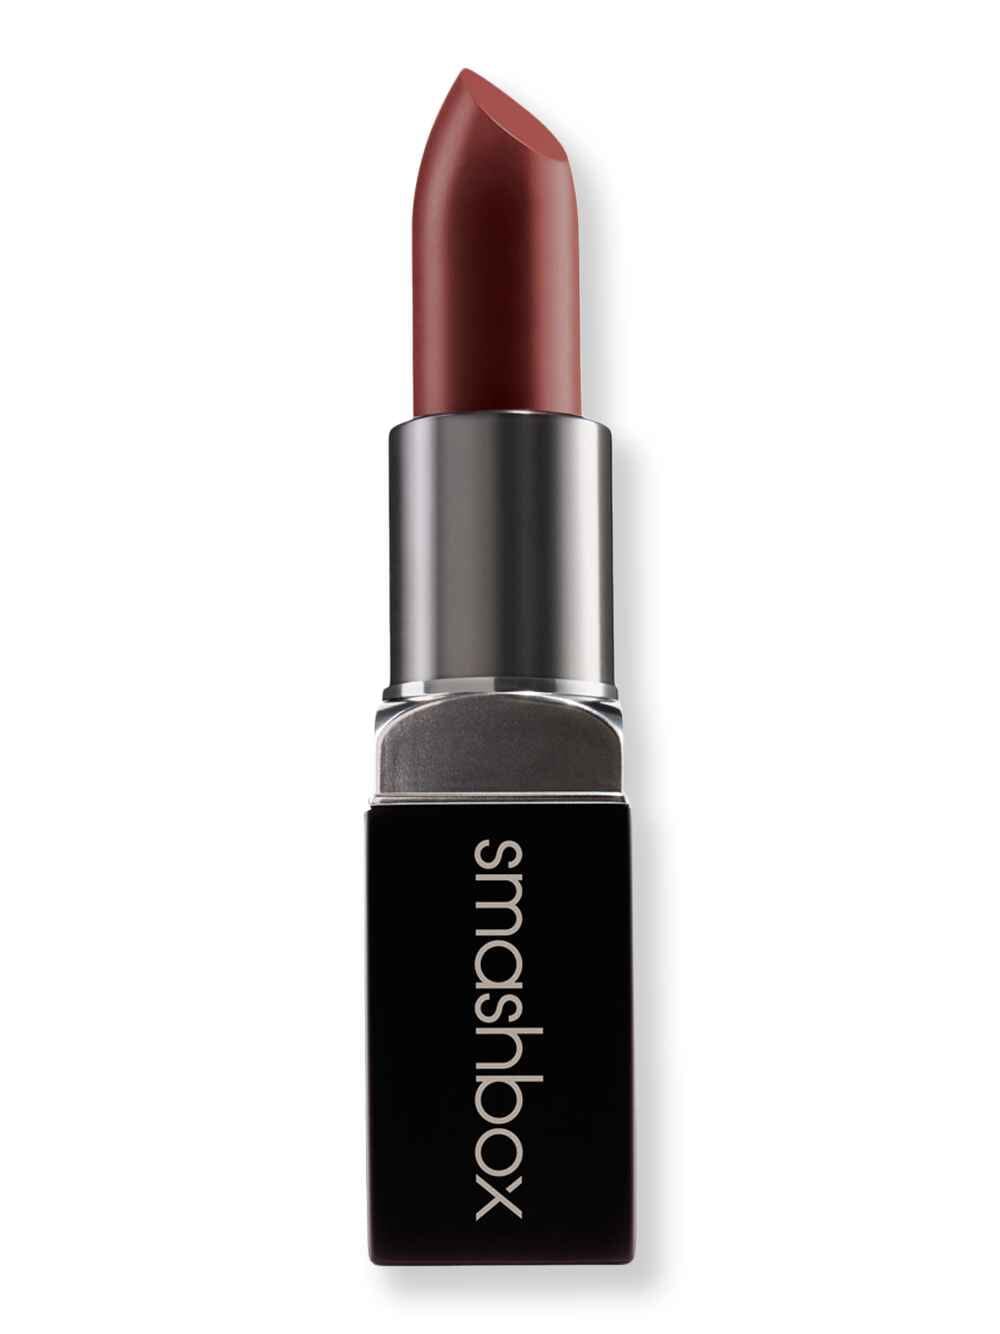 Smashbox Smashbox Be Legendary Cream Lipstick .1 oz3 gmCognac Lipstick, Lip Gloss, & Lip Liners 